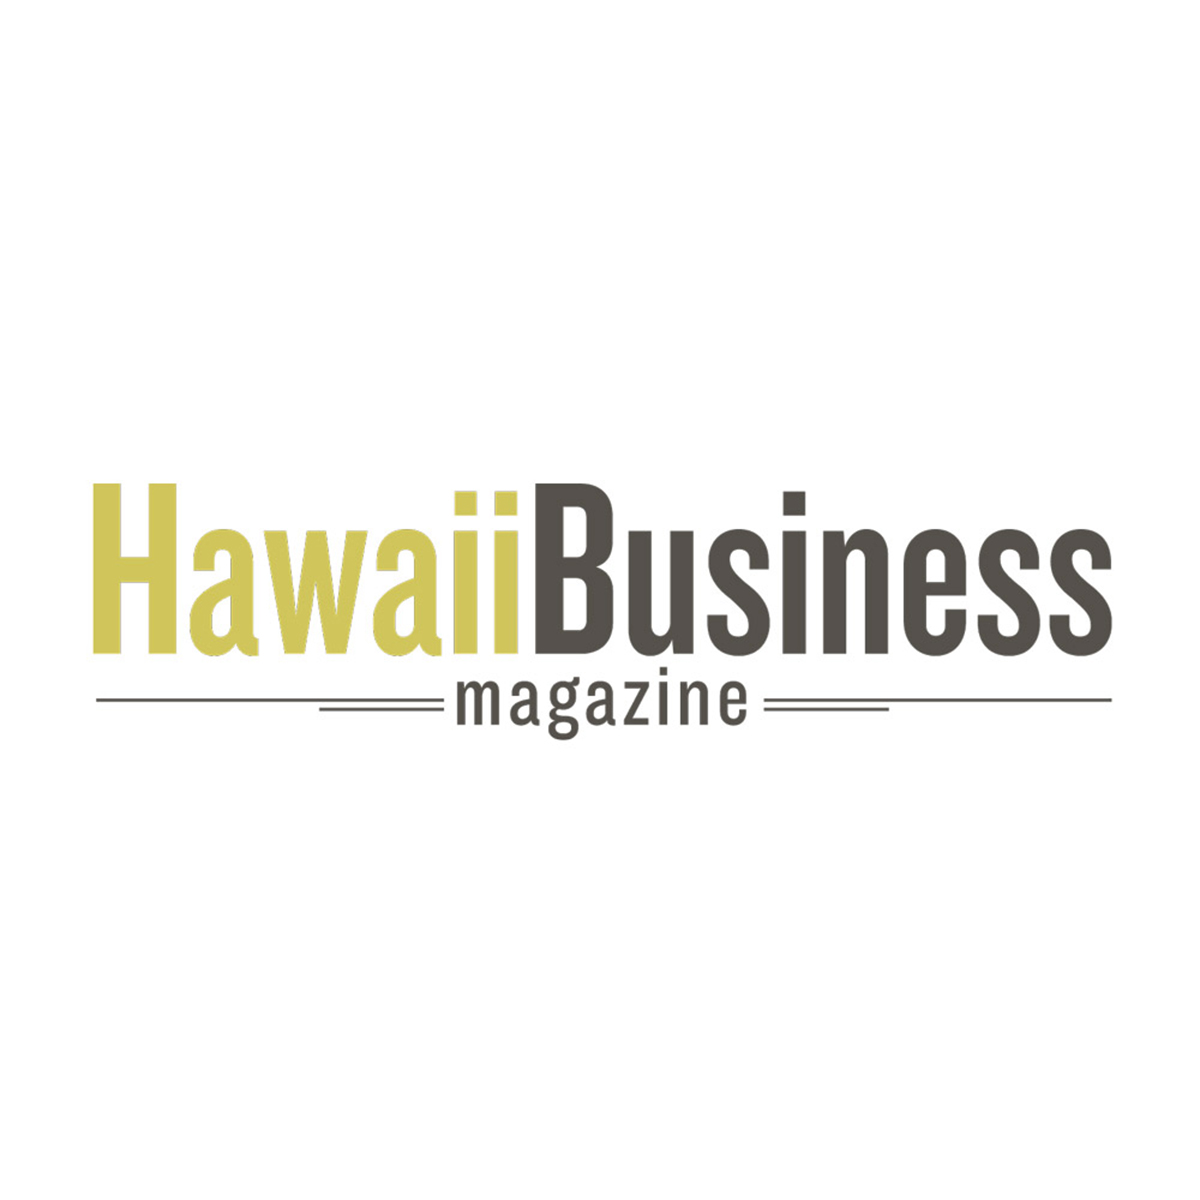 Hawaii business magazine.jpg